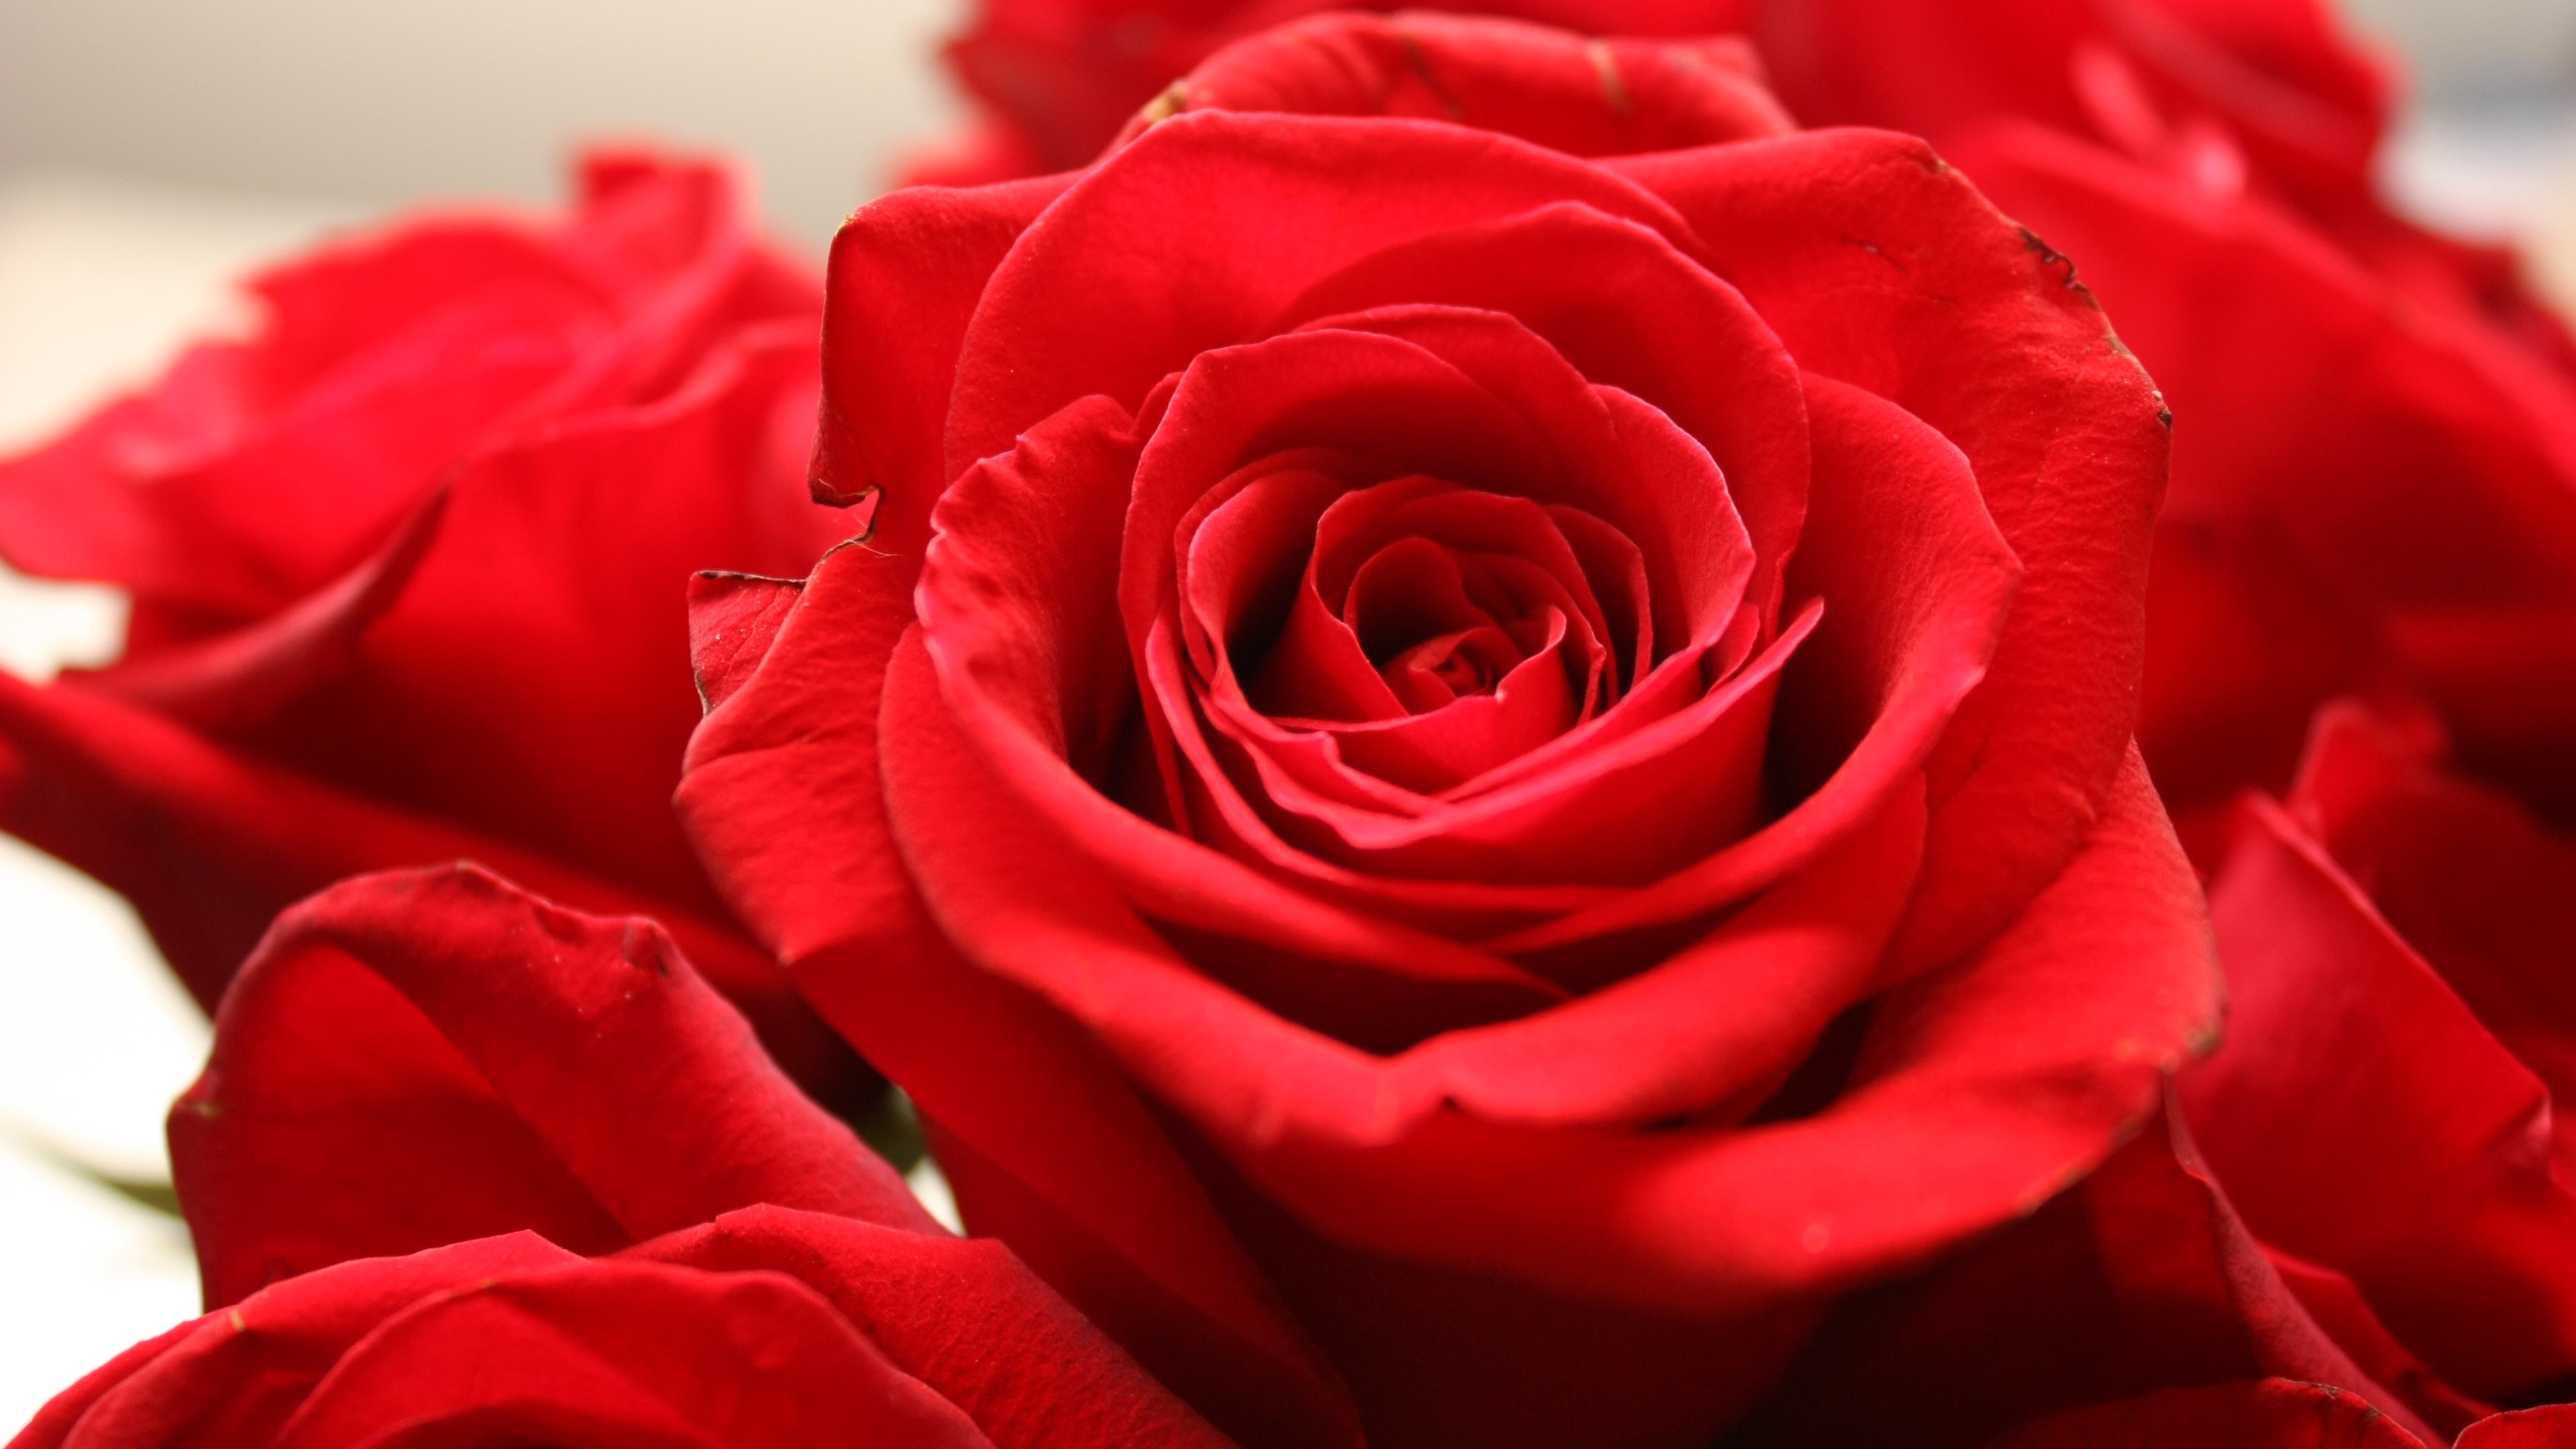 3840x2160 Wallpaper: Red Roses - The Love Symbol. Ultra HD 4K 